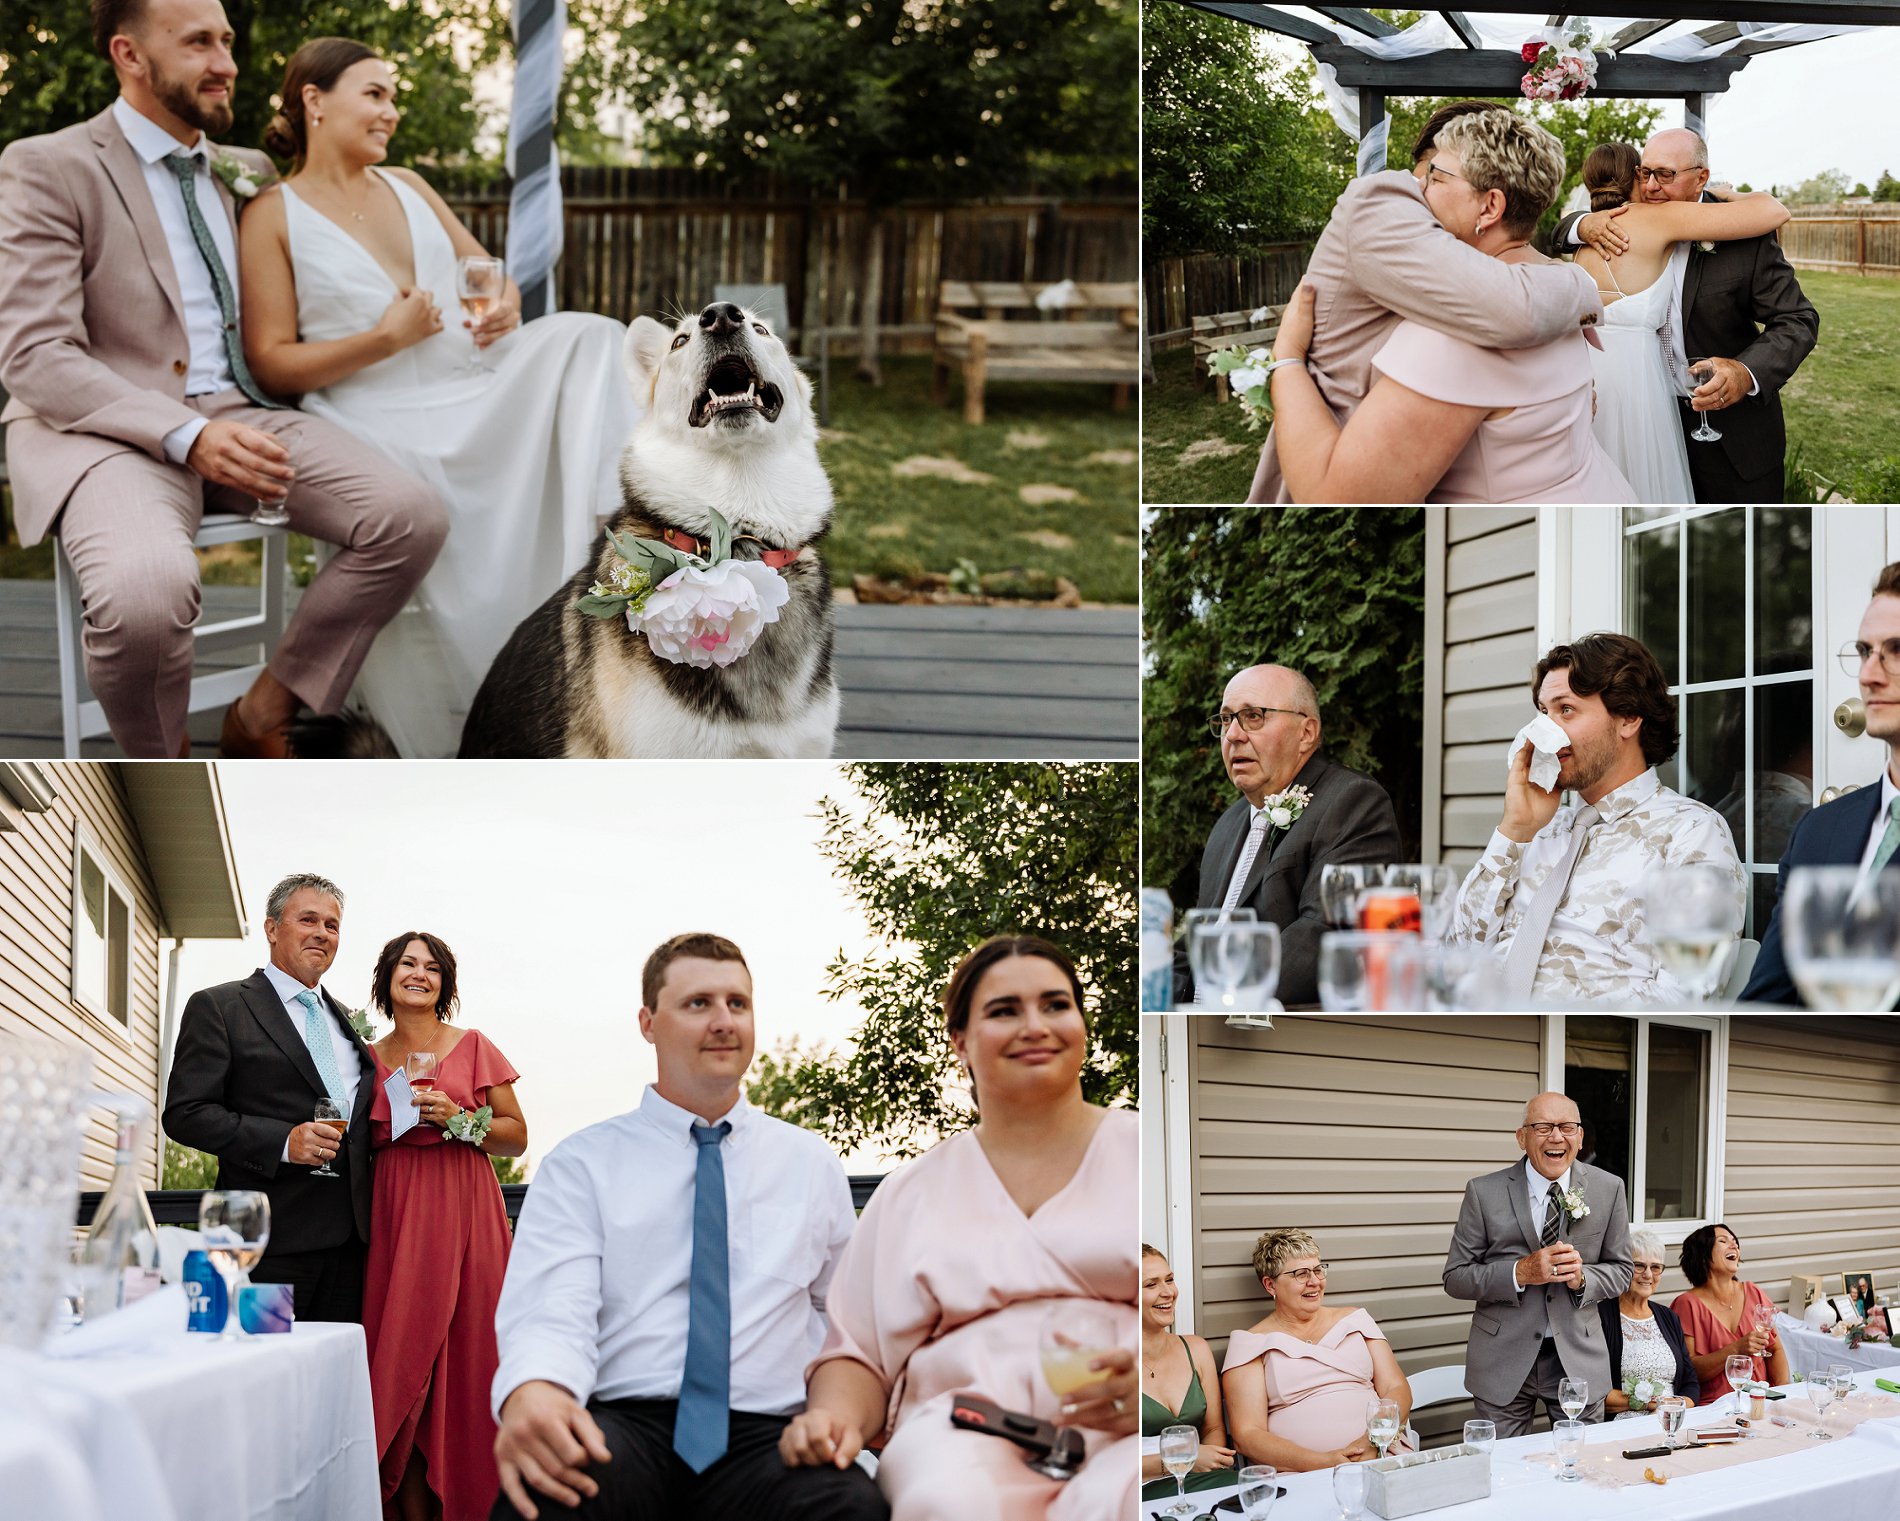 Documentary storytelling wedding photography at a backyard wedding in Saskatoon.